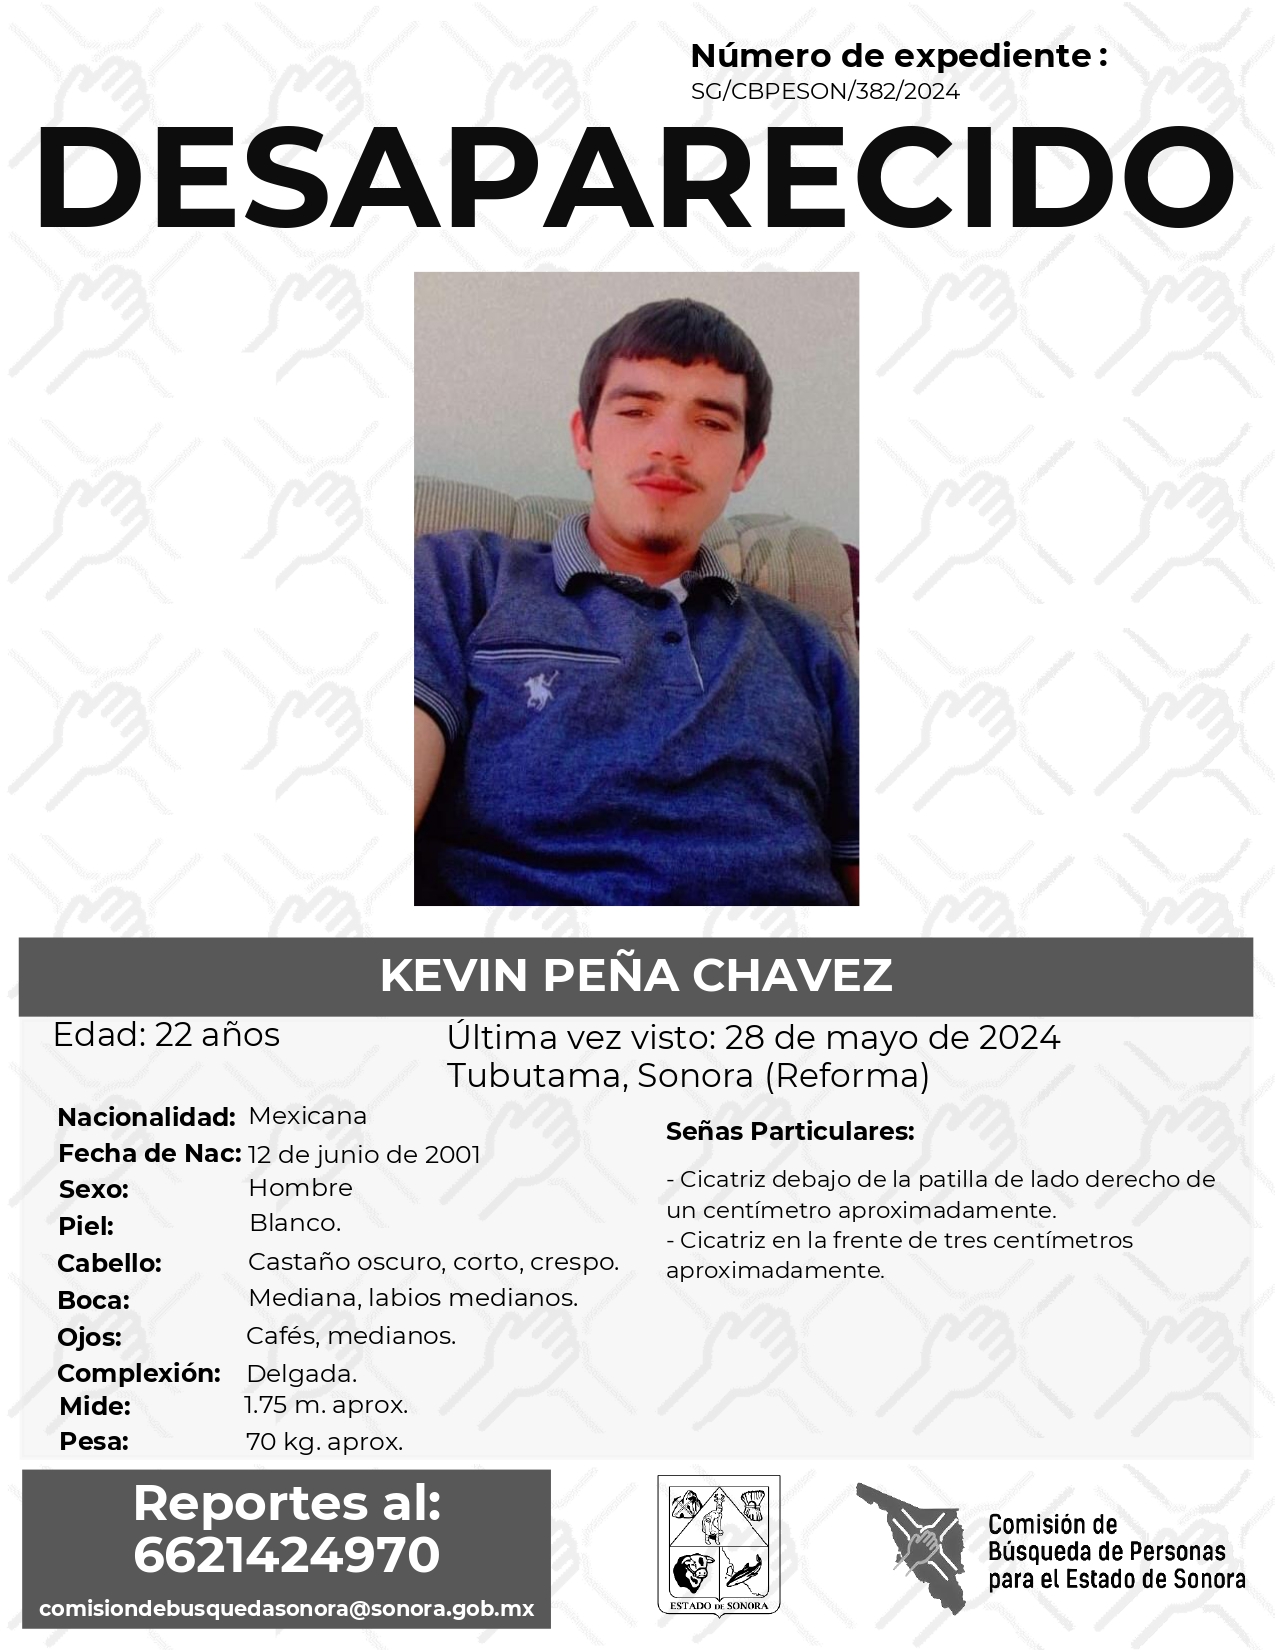 KEVIN PEÑA CHAVEZ - DESAPARECIDO